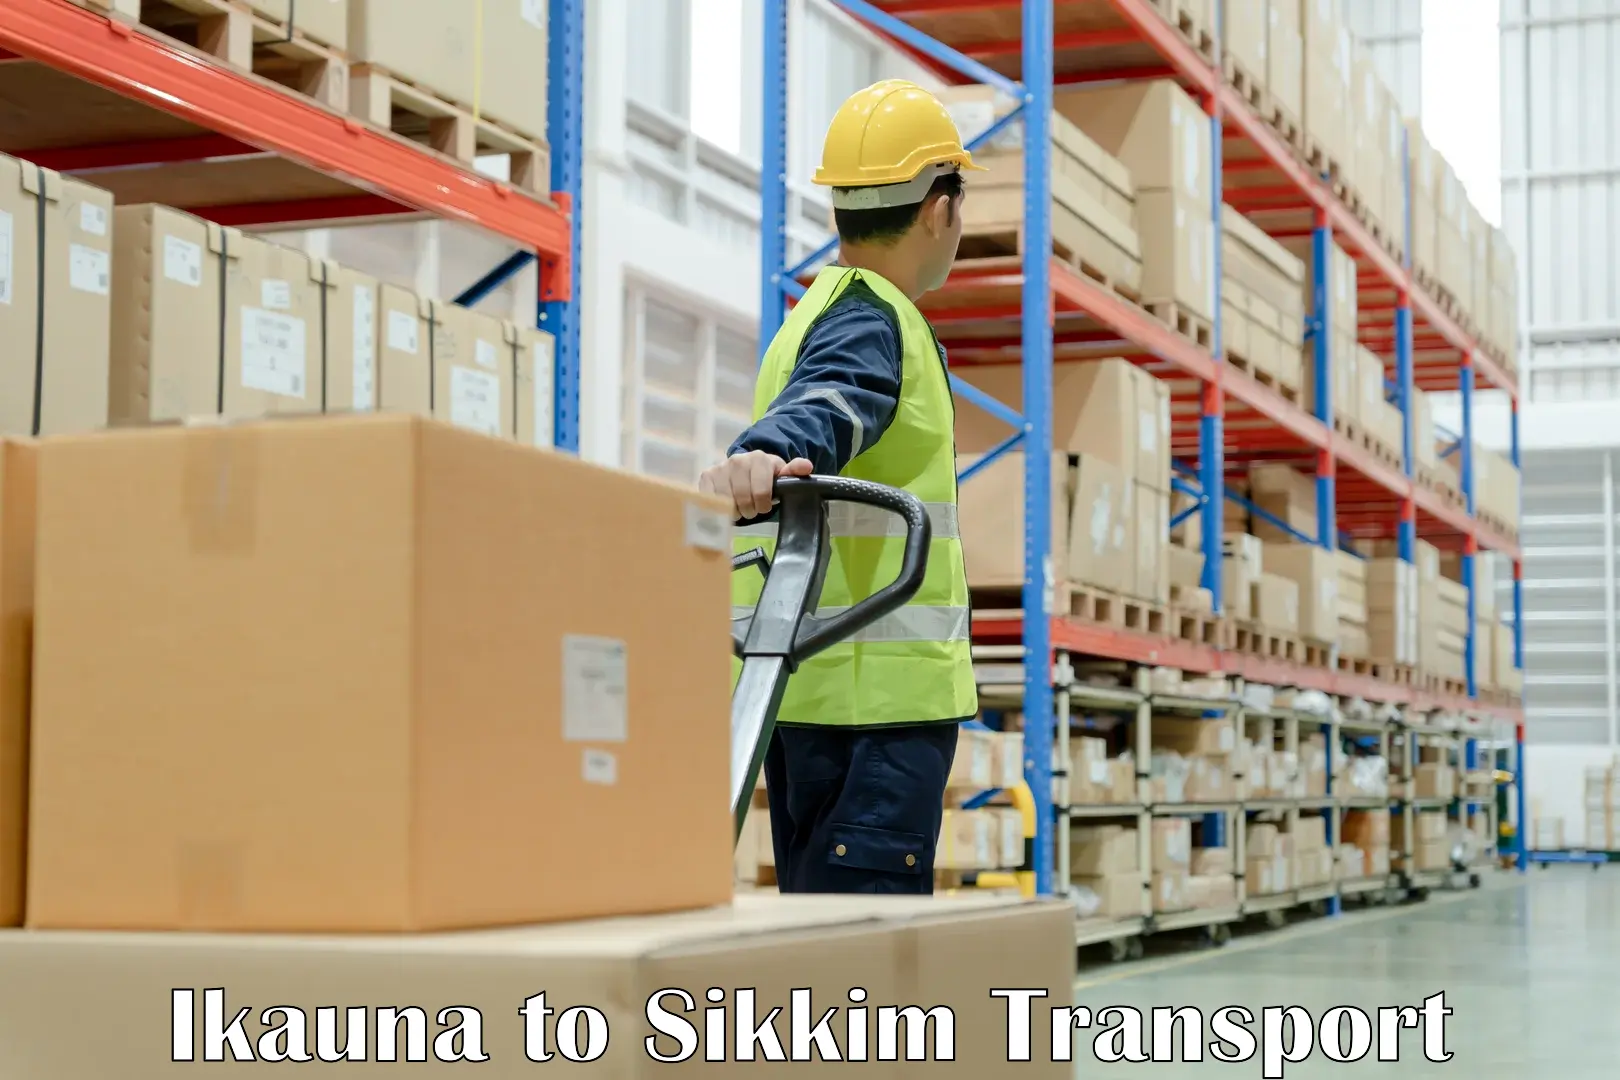 Transport shared services Ikauna to North Sikkim